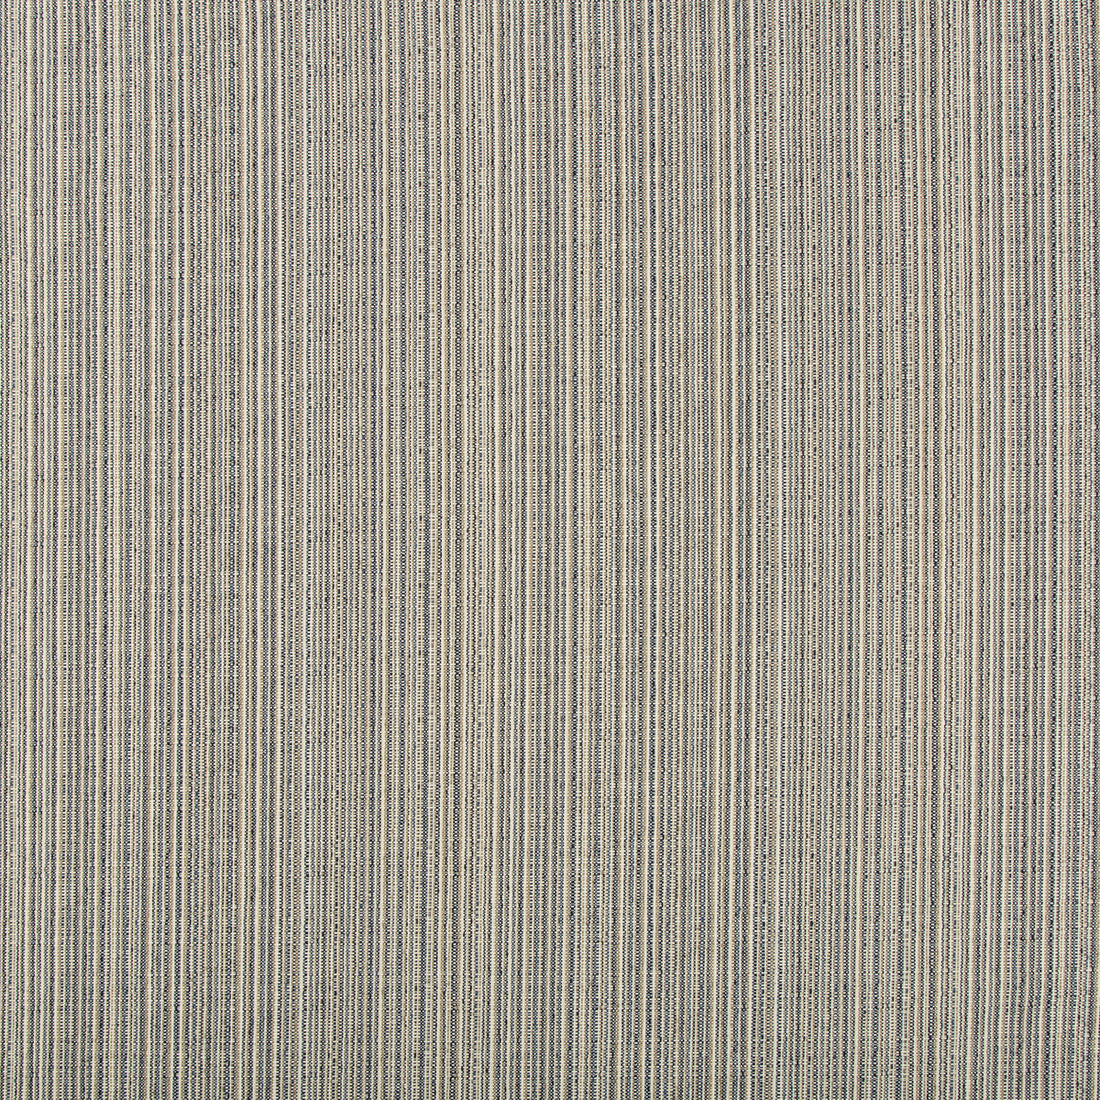 Kravet Smart fabric in 34314-1516 color - pattern 34314.1516.0 - by Kravet Smart